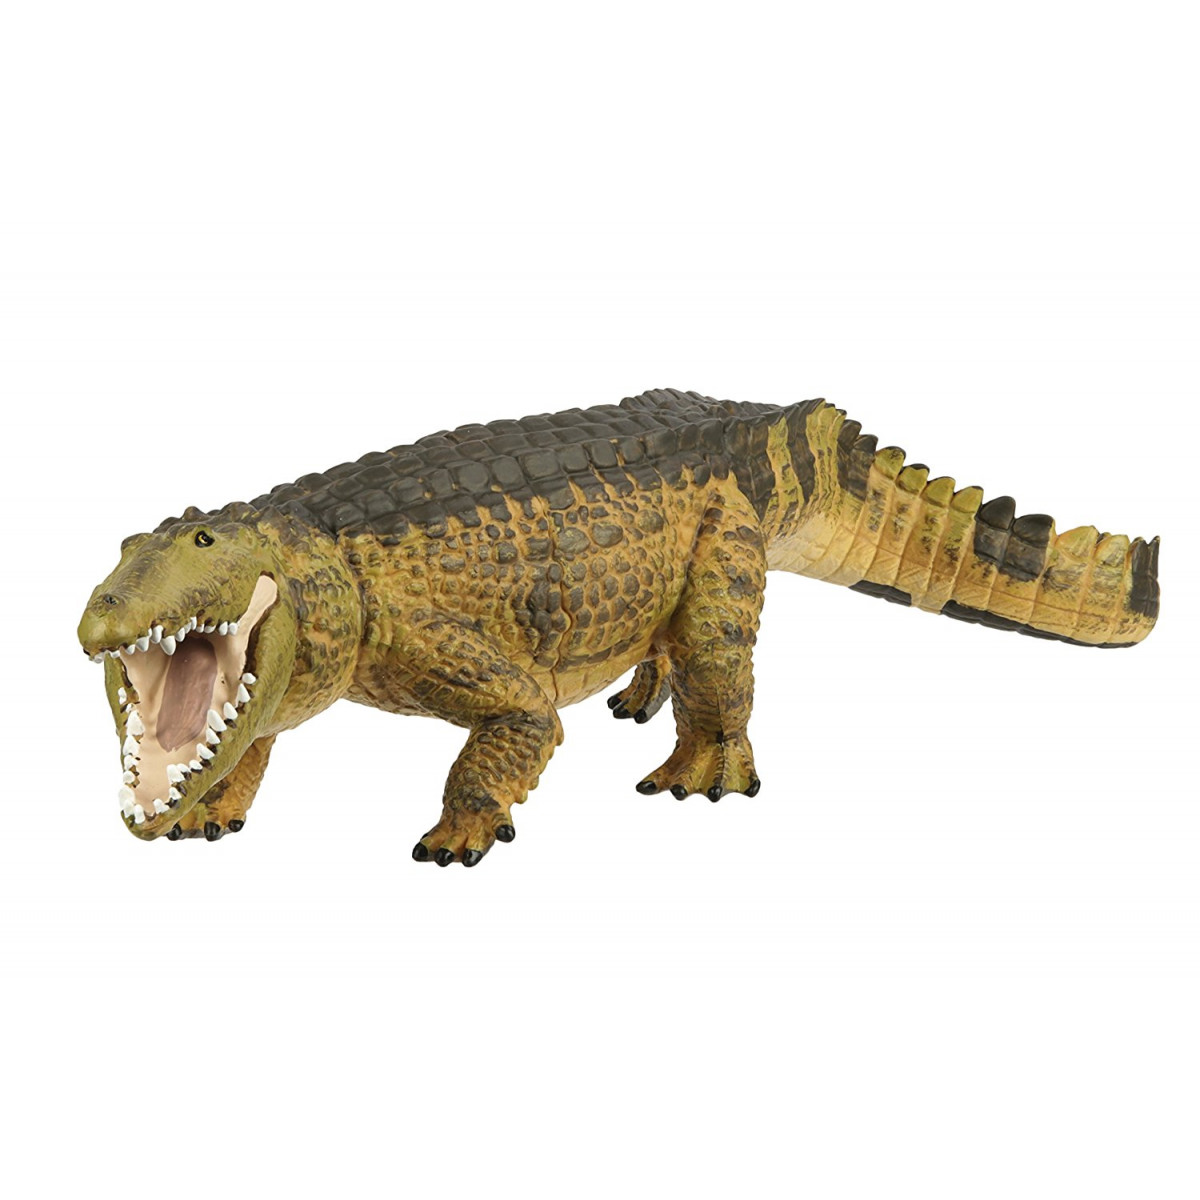 saltwater crocodile toy